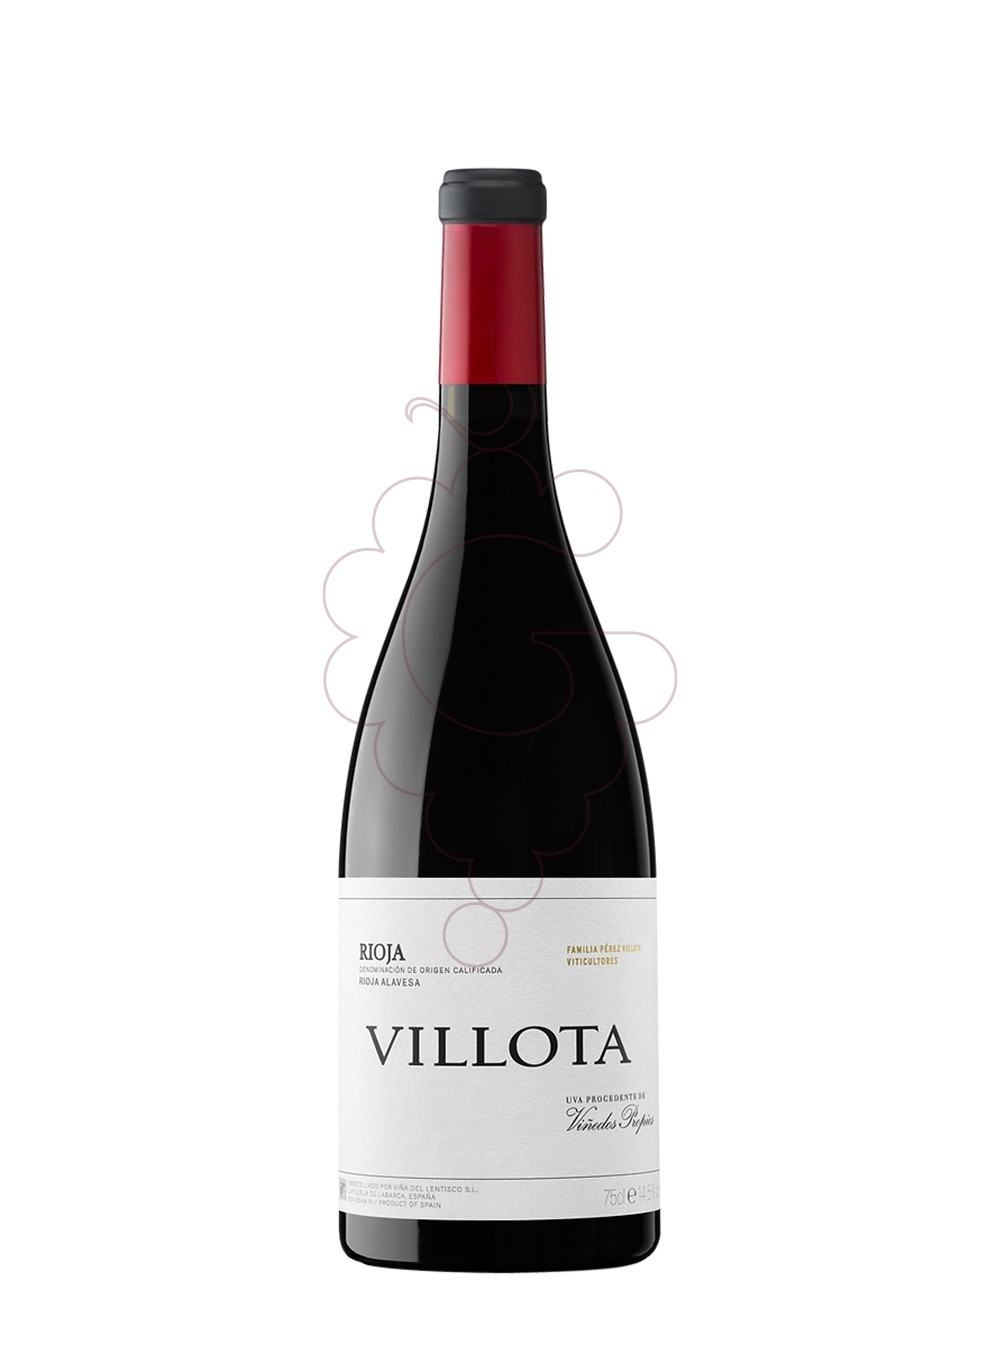 Photo Villota d.ricardo ng 2018 75cl vin rouge